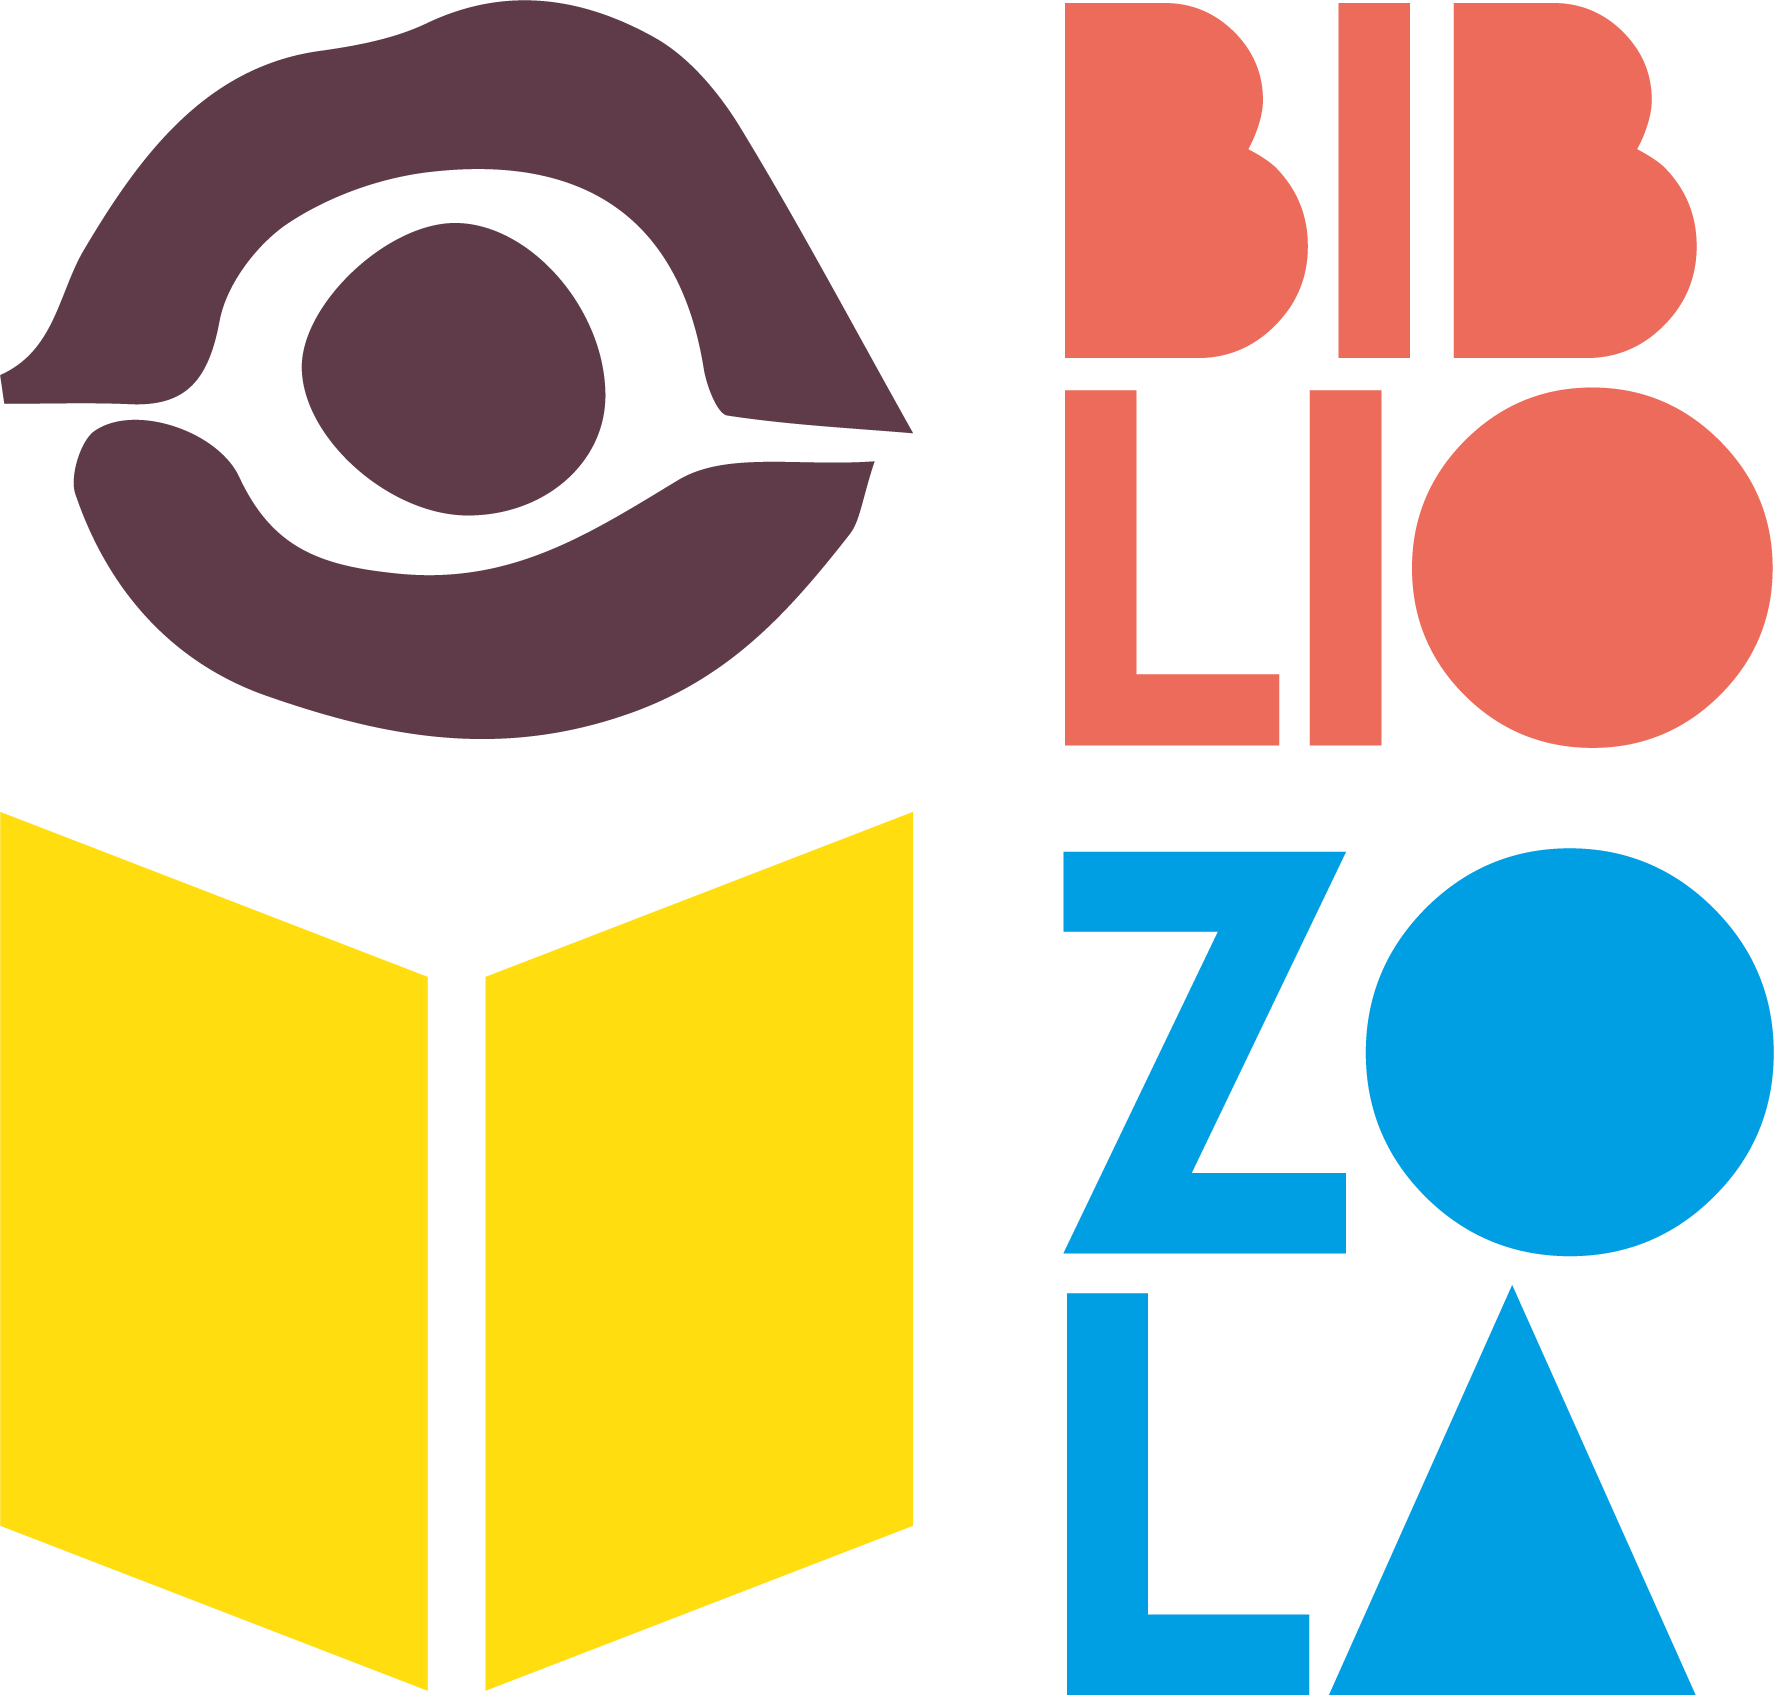 Bibliozola - logo-04.png